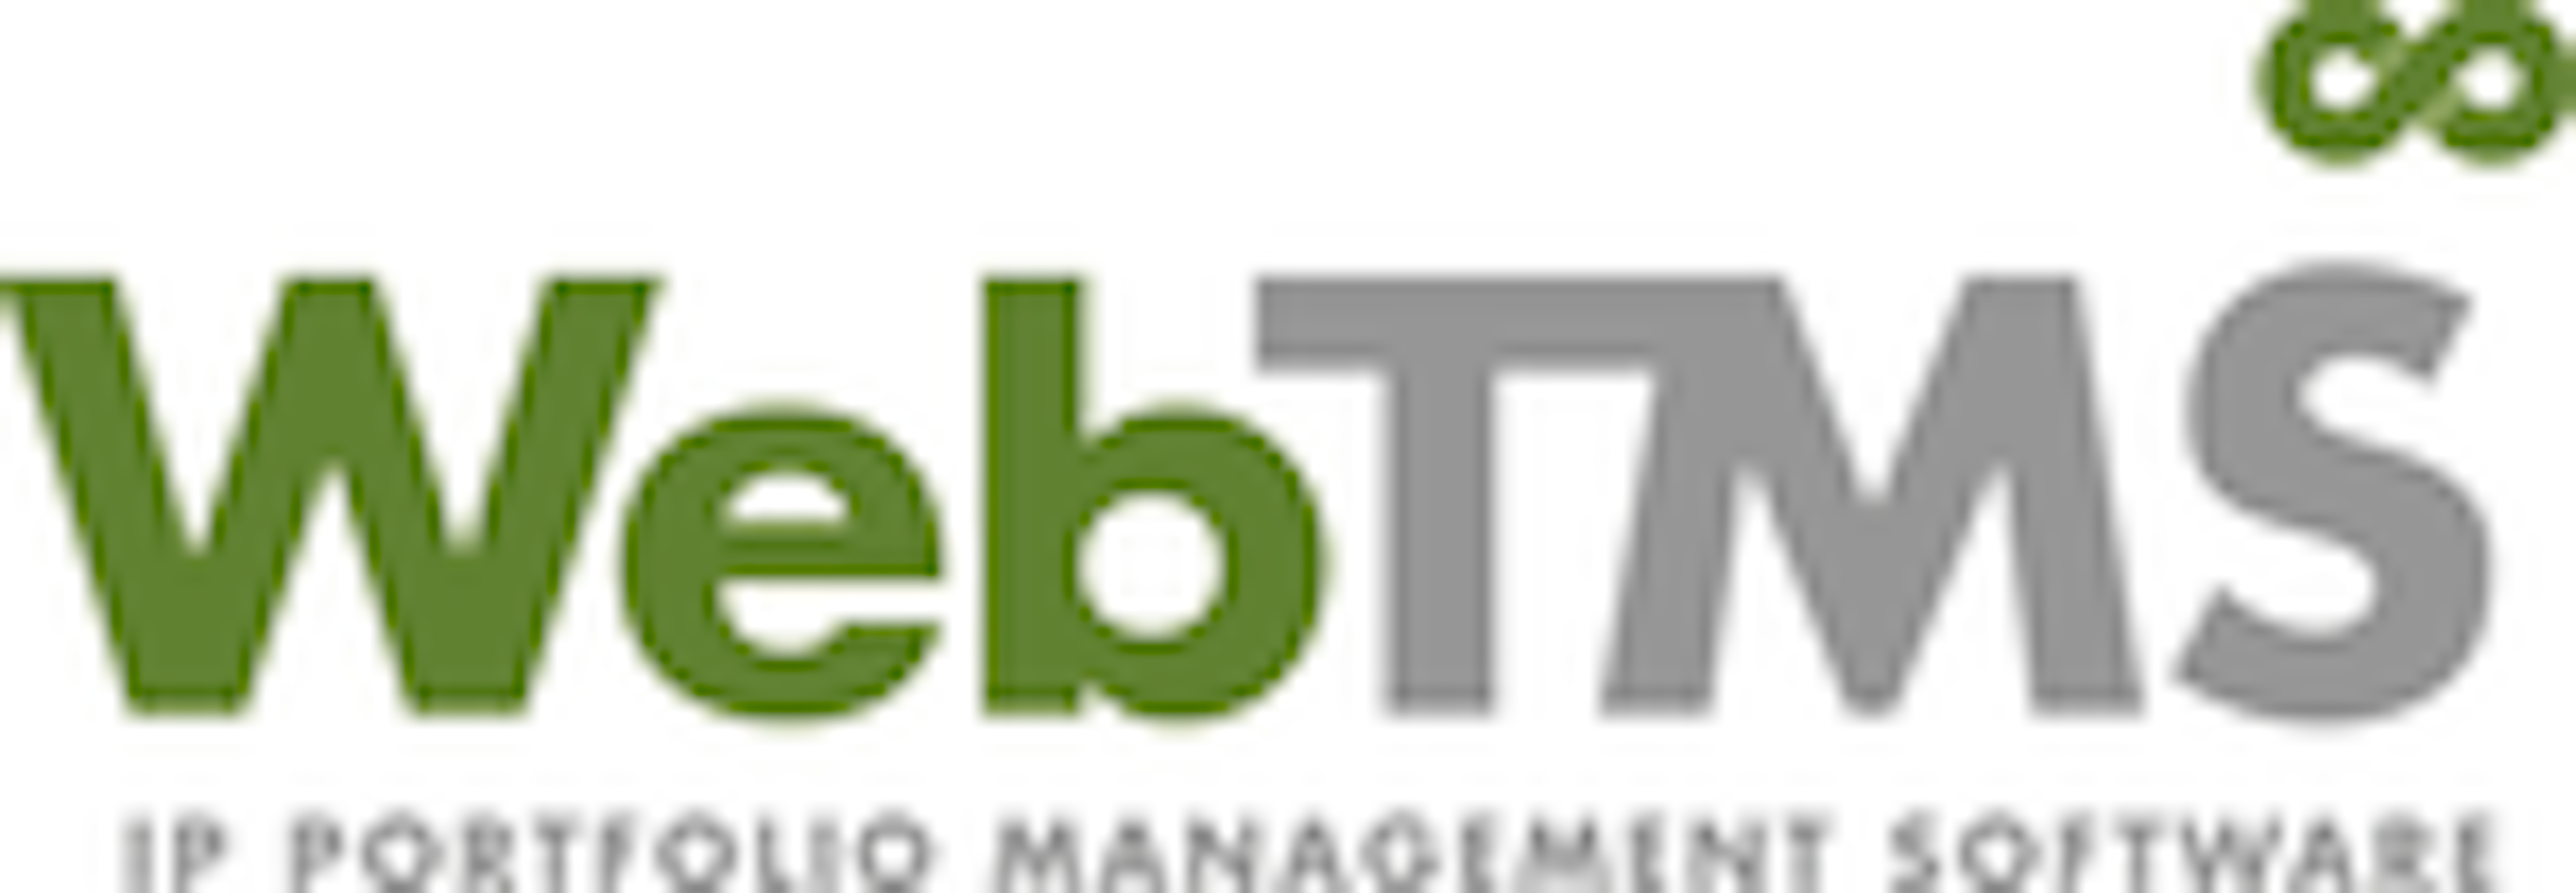 WebTMS Logo